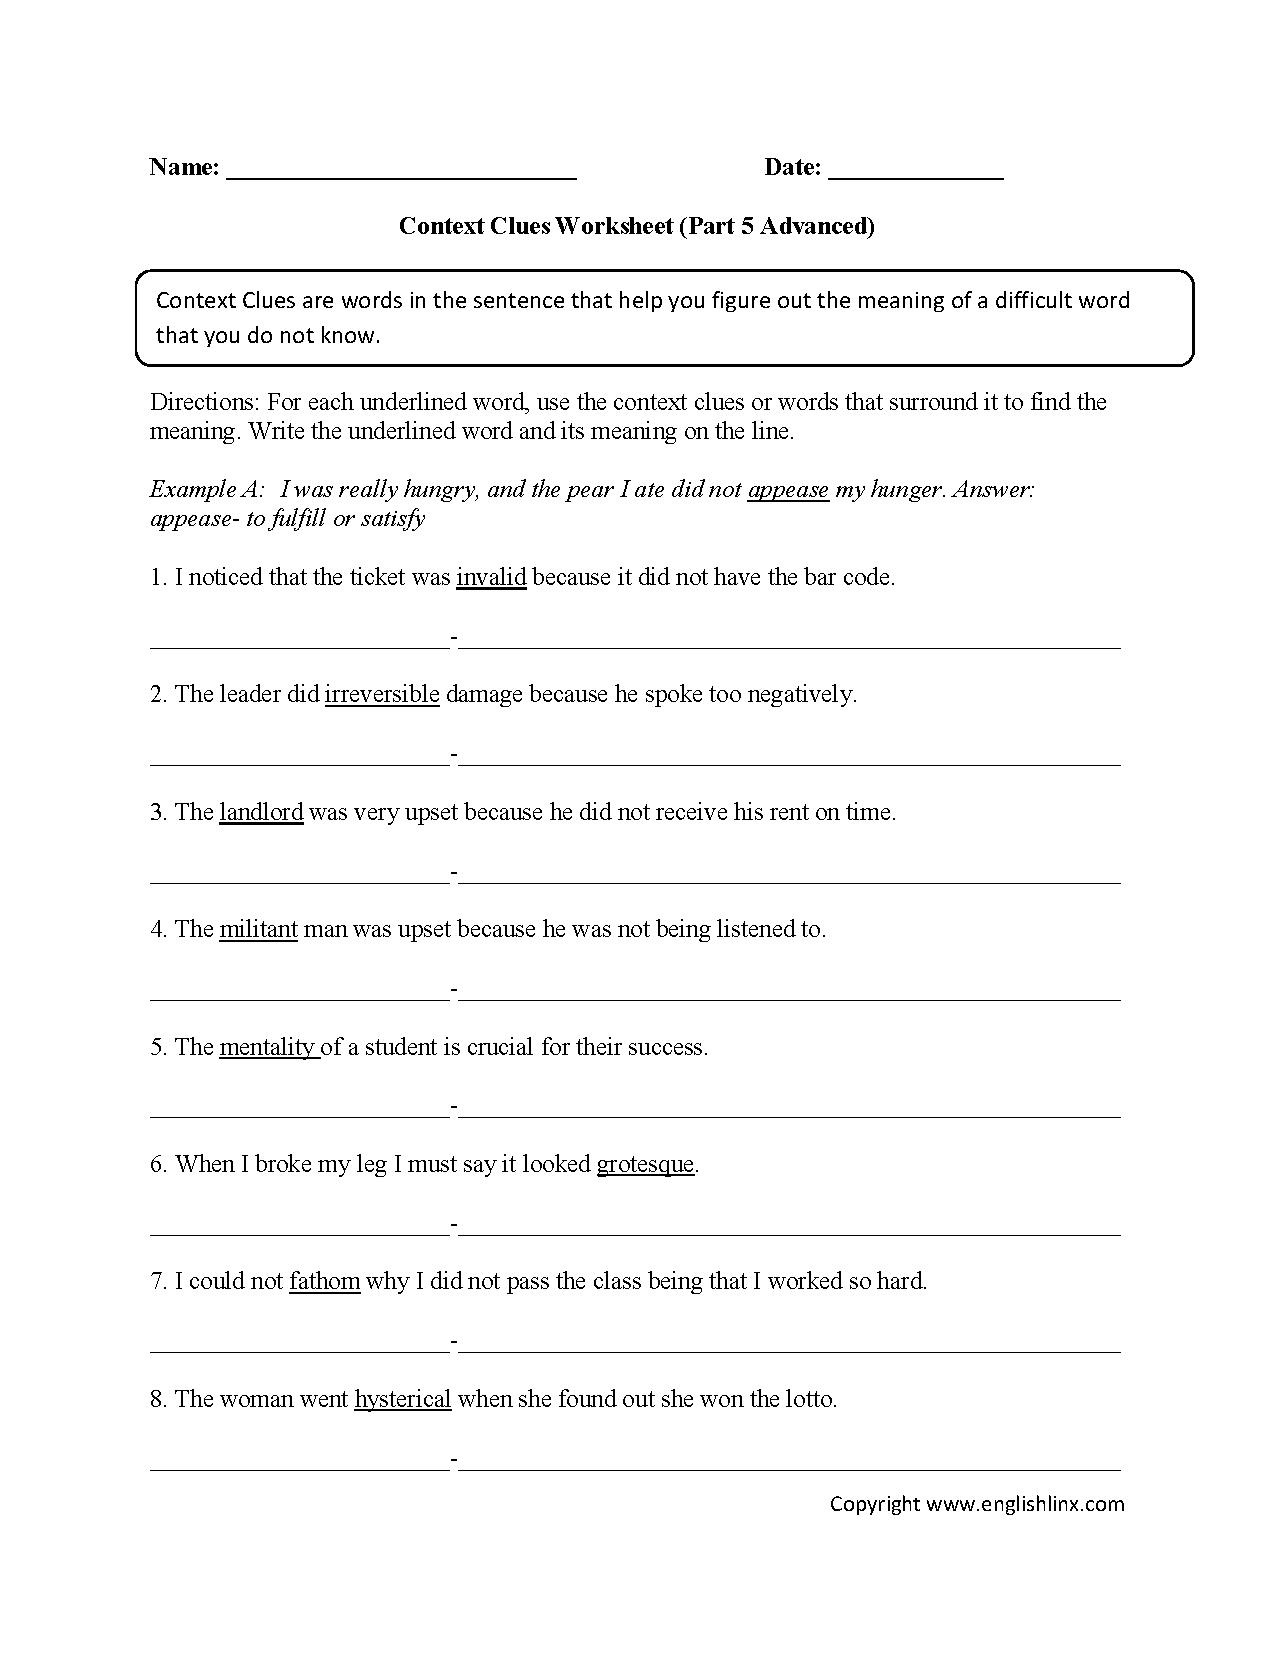 Context Clues Worksheets Part 5 Advanced